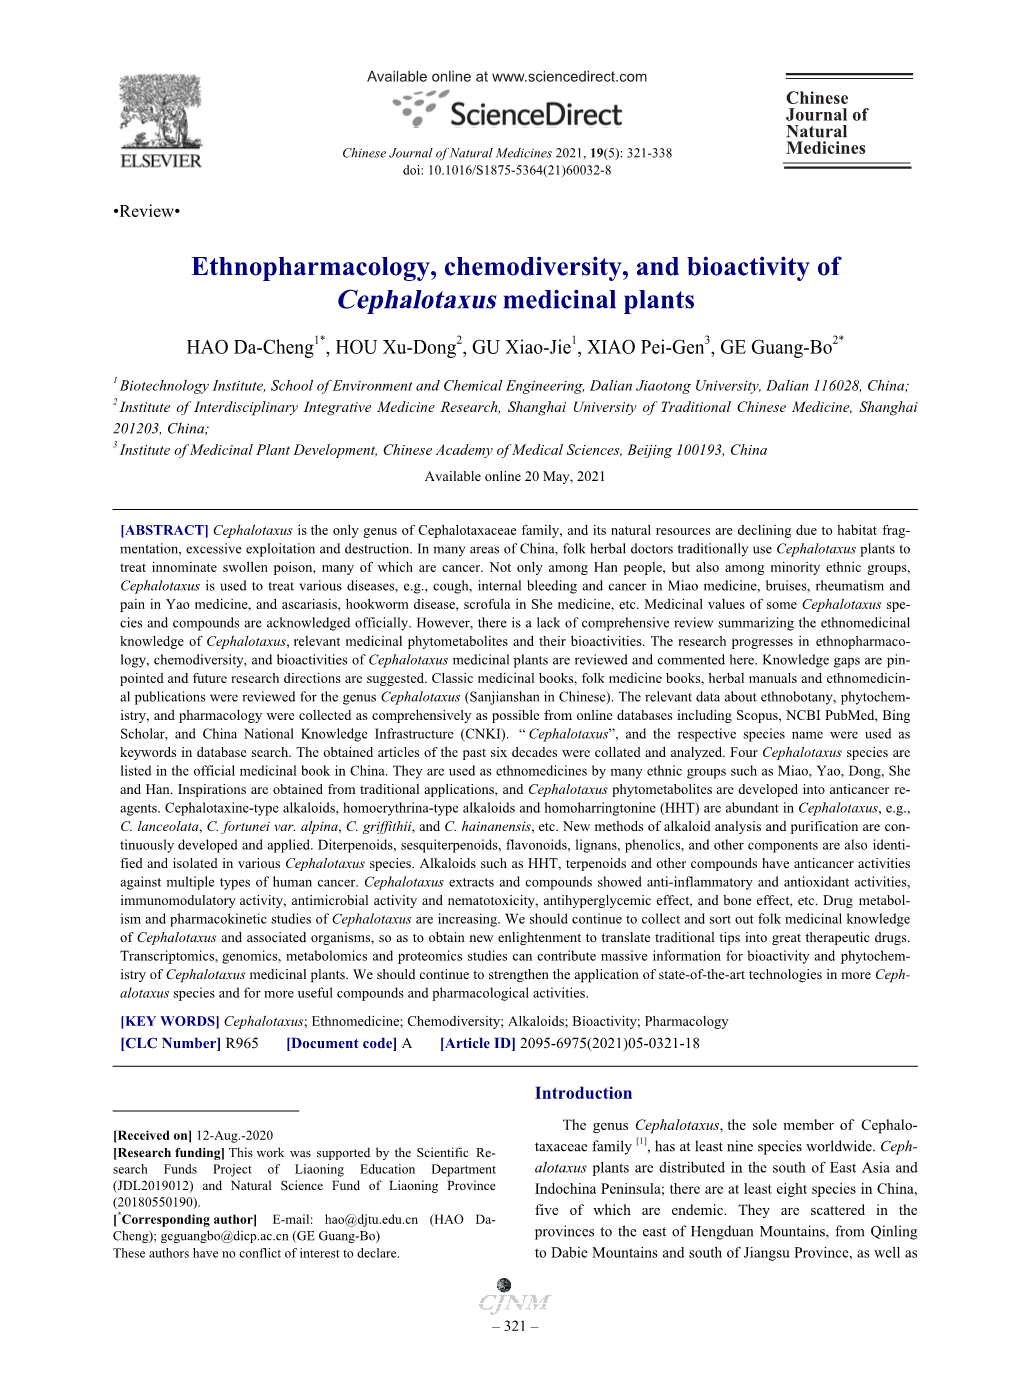 Ethnopharmacology, Chemodiversity, and Bioactivity of Cephalotaxus Medicinal Plants